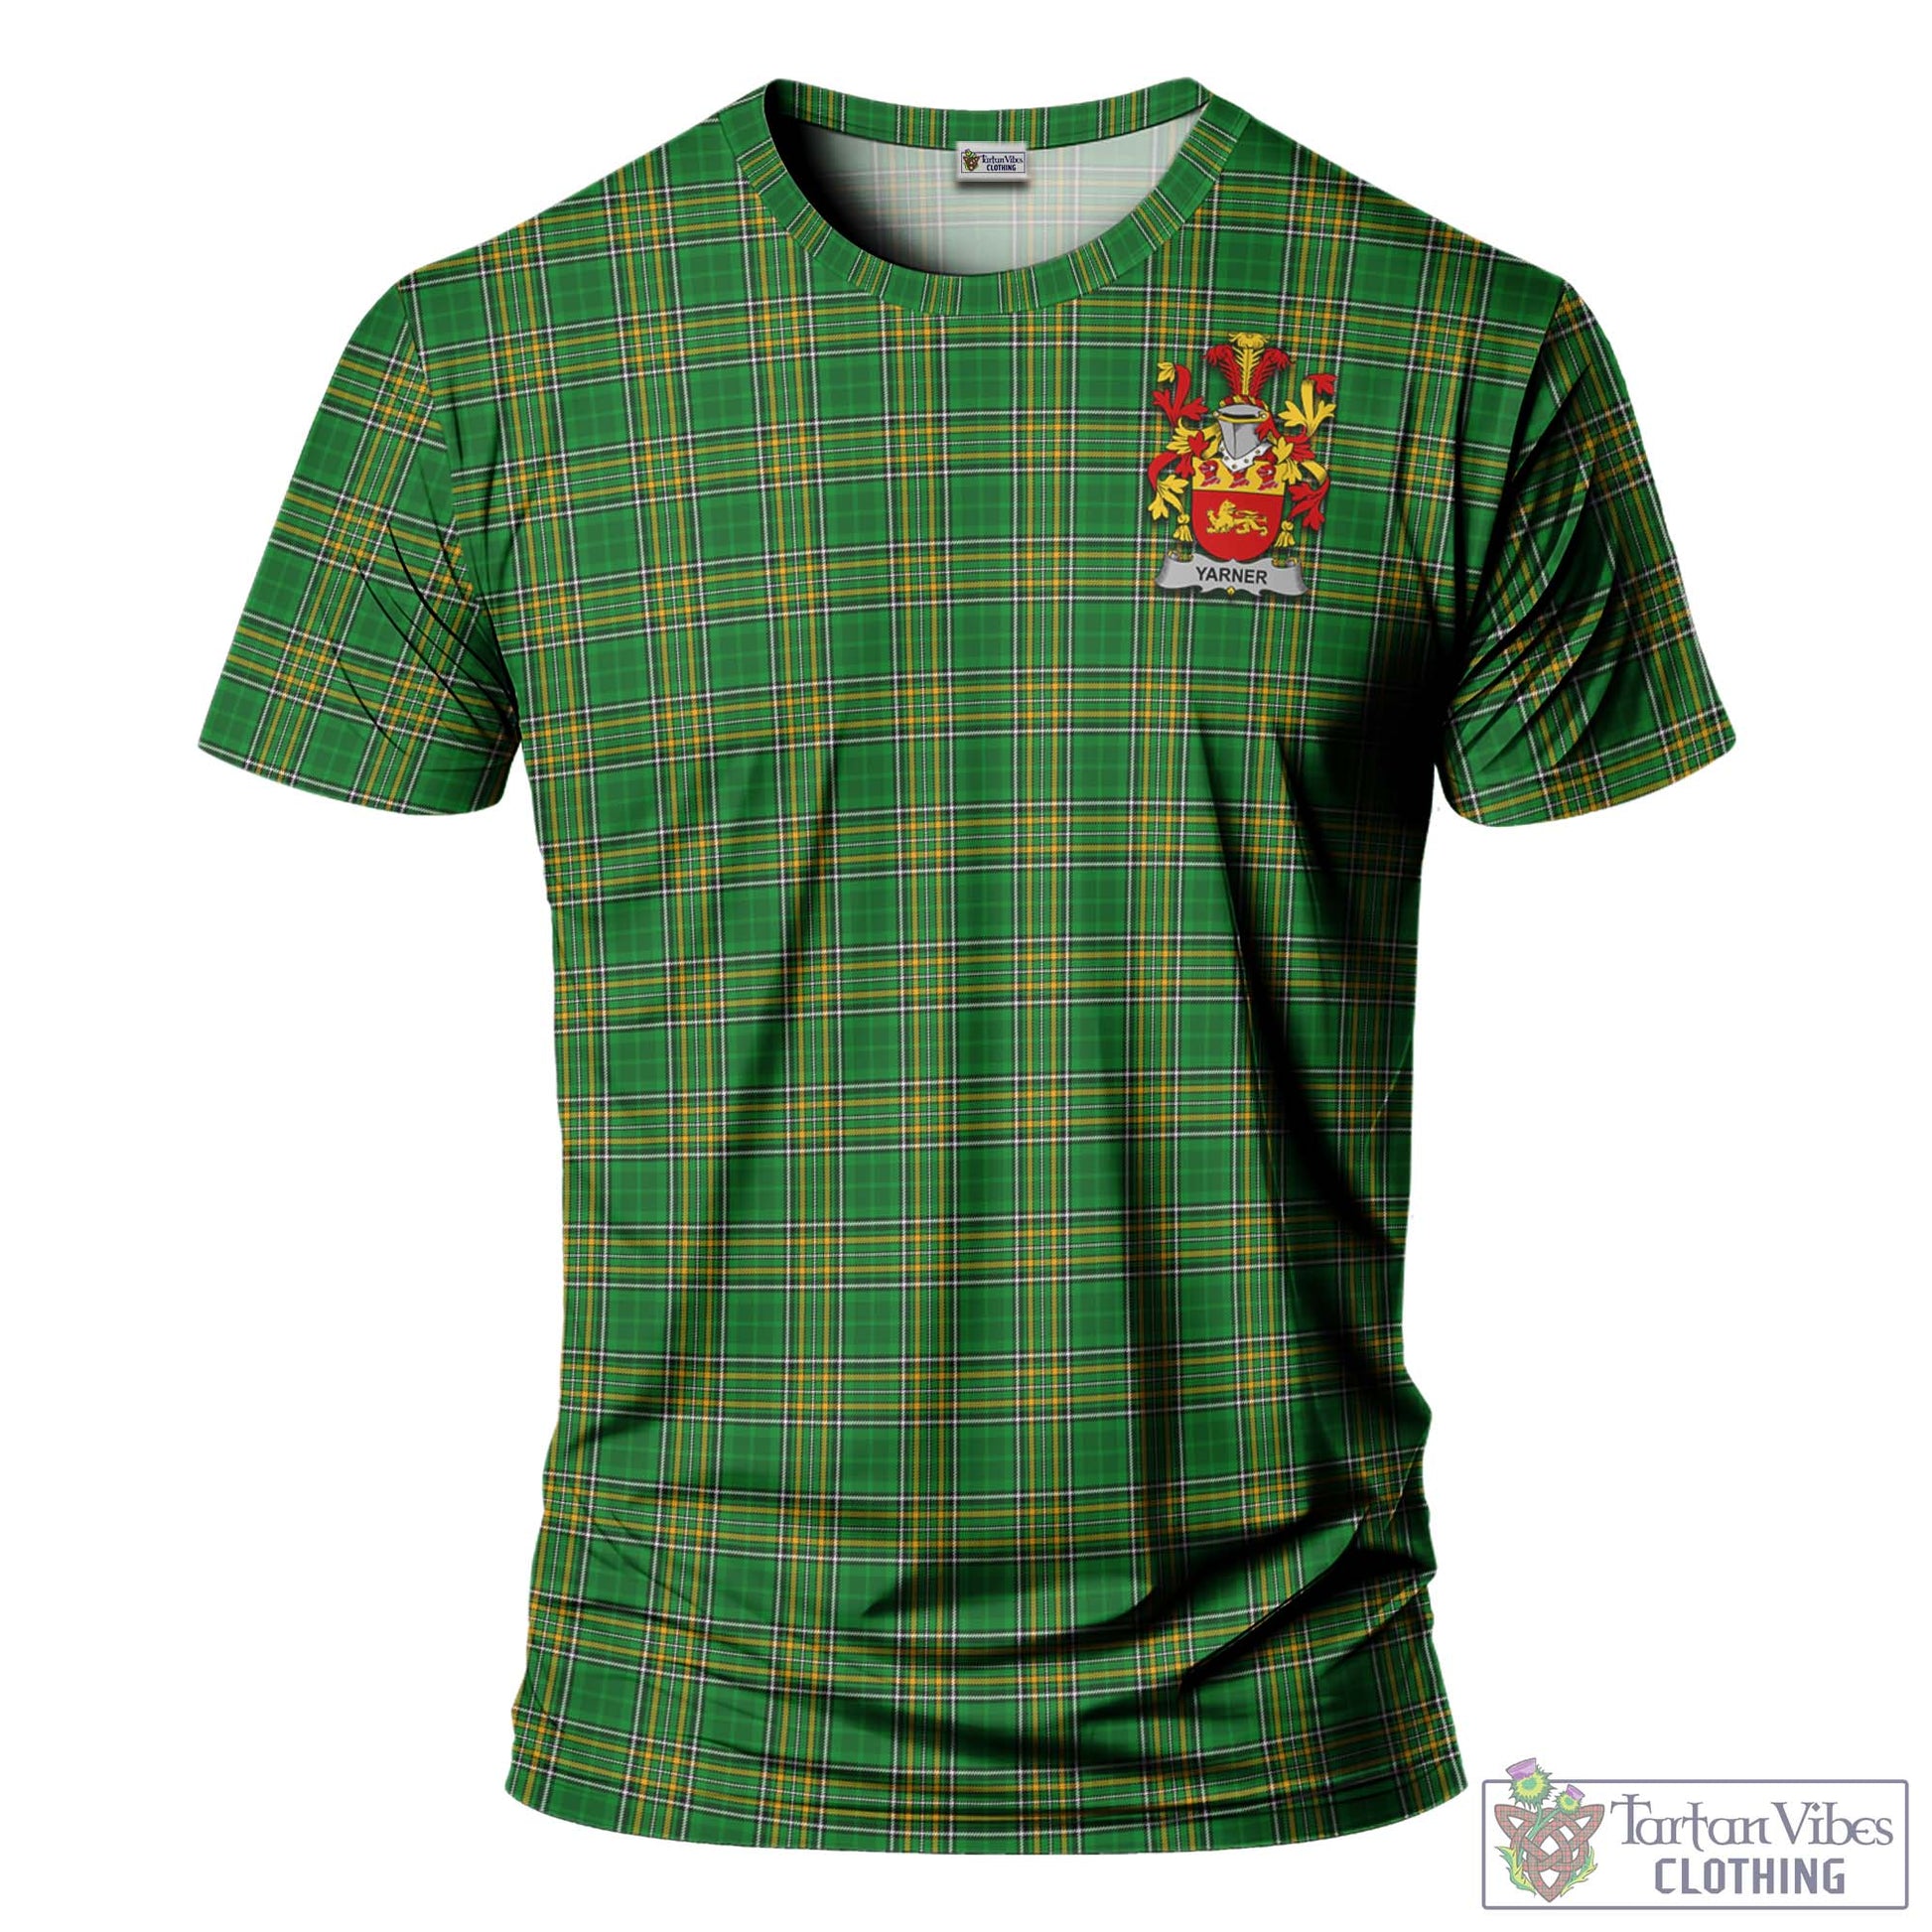 Tartan Vibes Clothing Yarner Ireland Clan Tartan T-Shirt with Family Seal